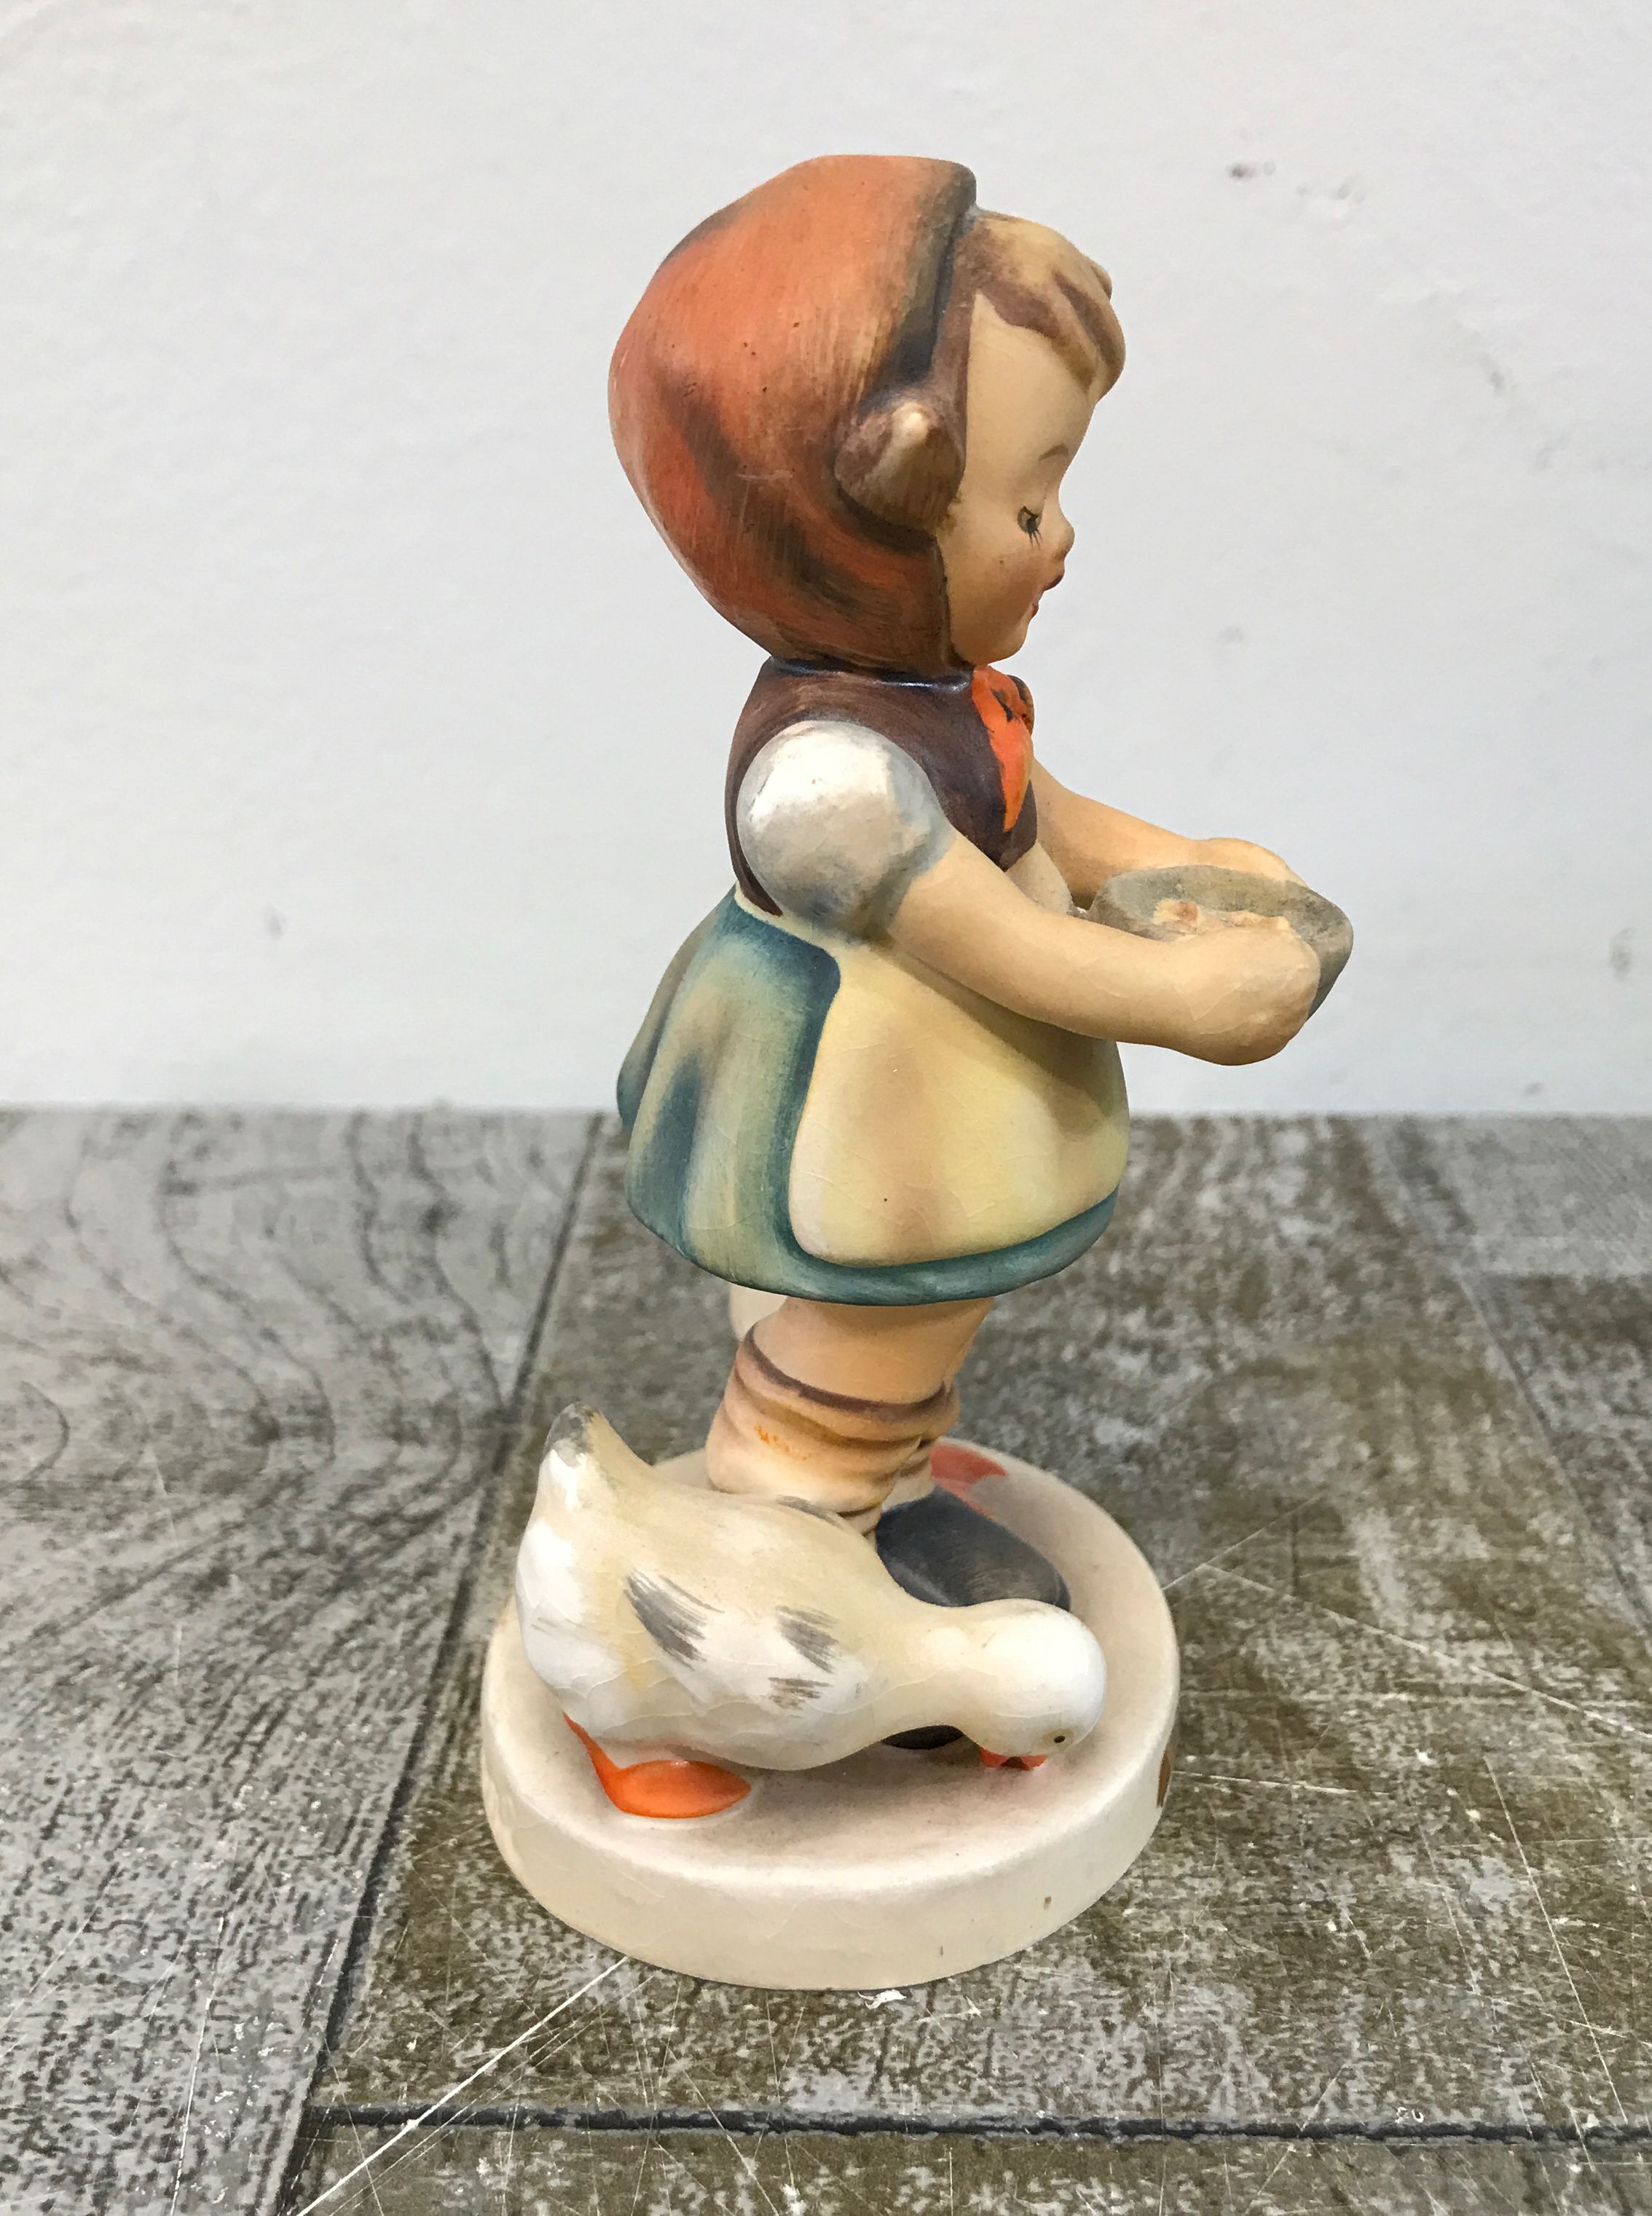 Hummel Goebel Western Germany #197 "Be Patient" Figurine